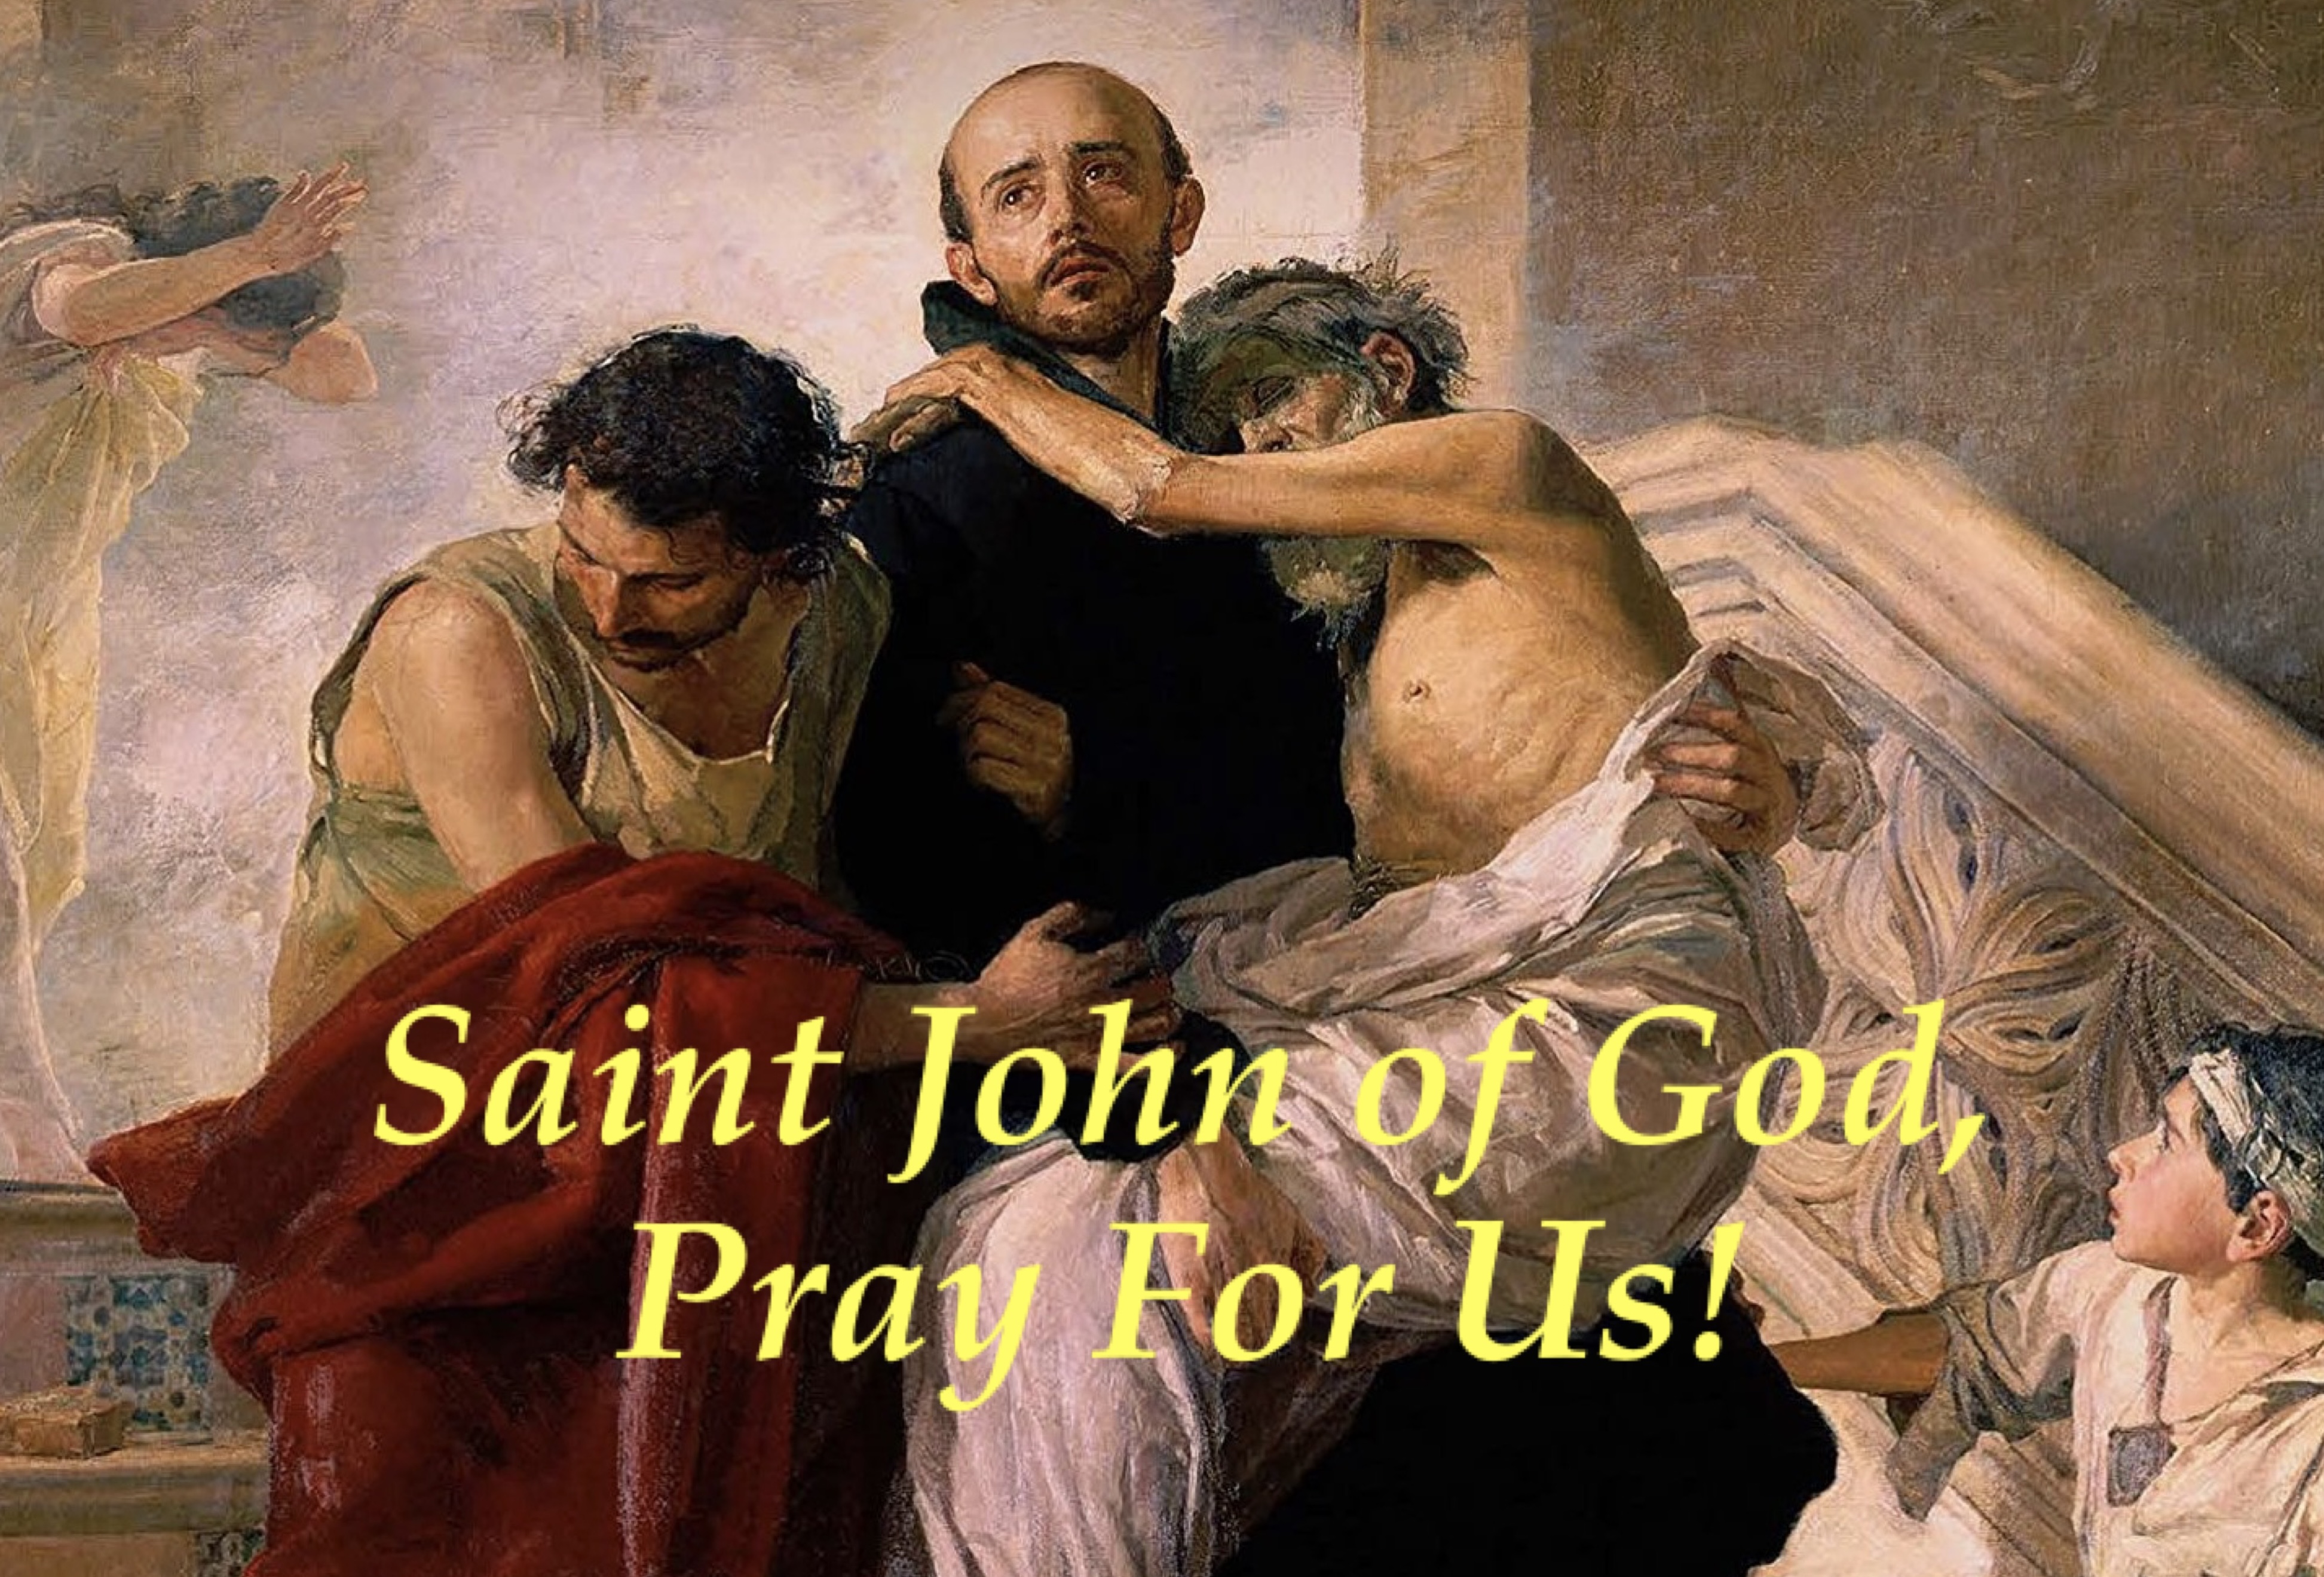 8th March - Saint John of God